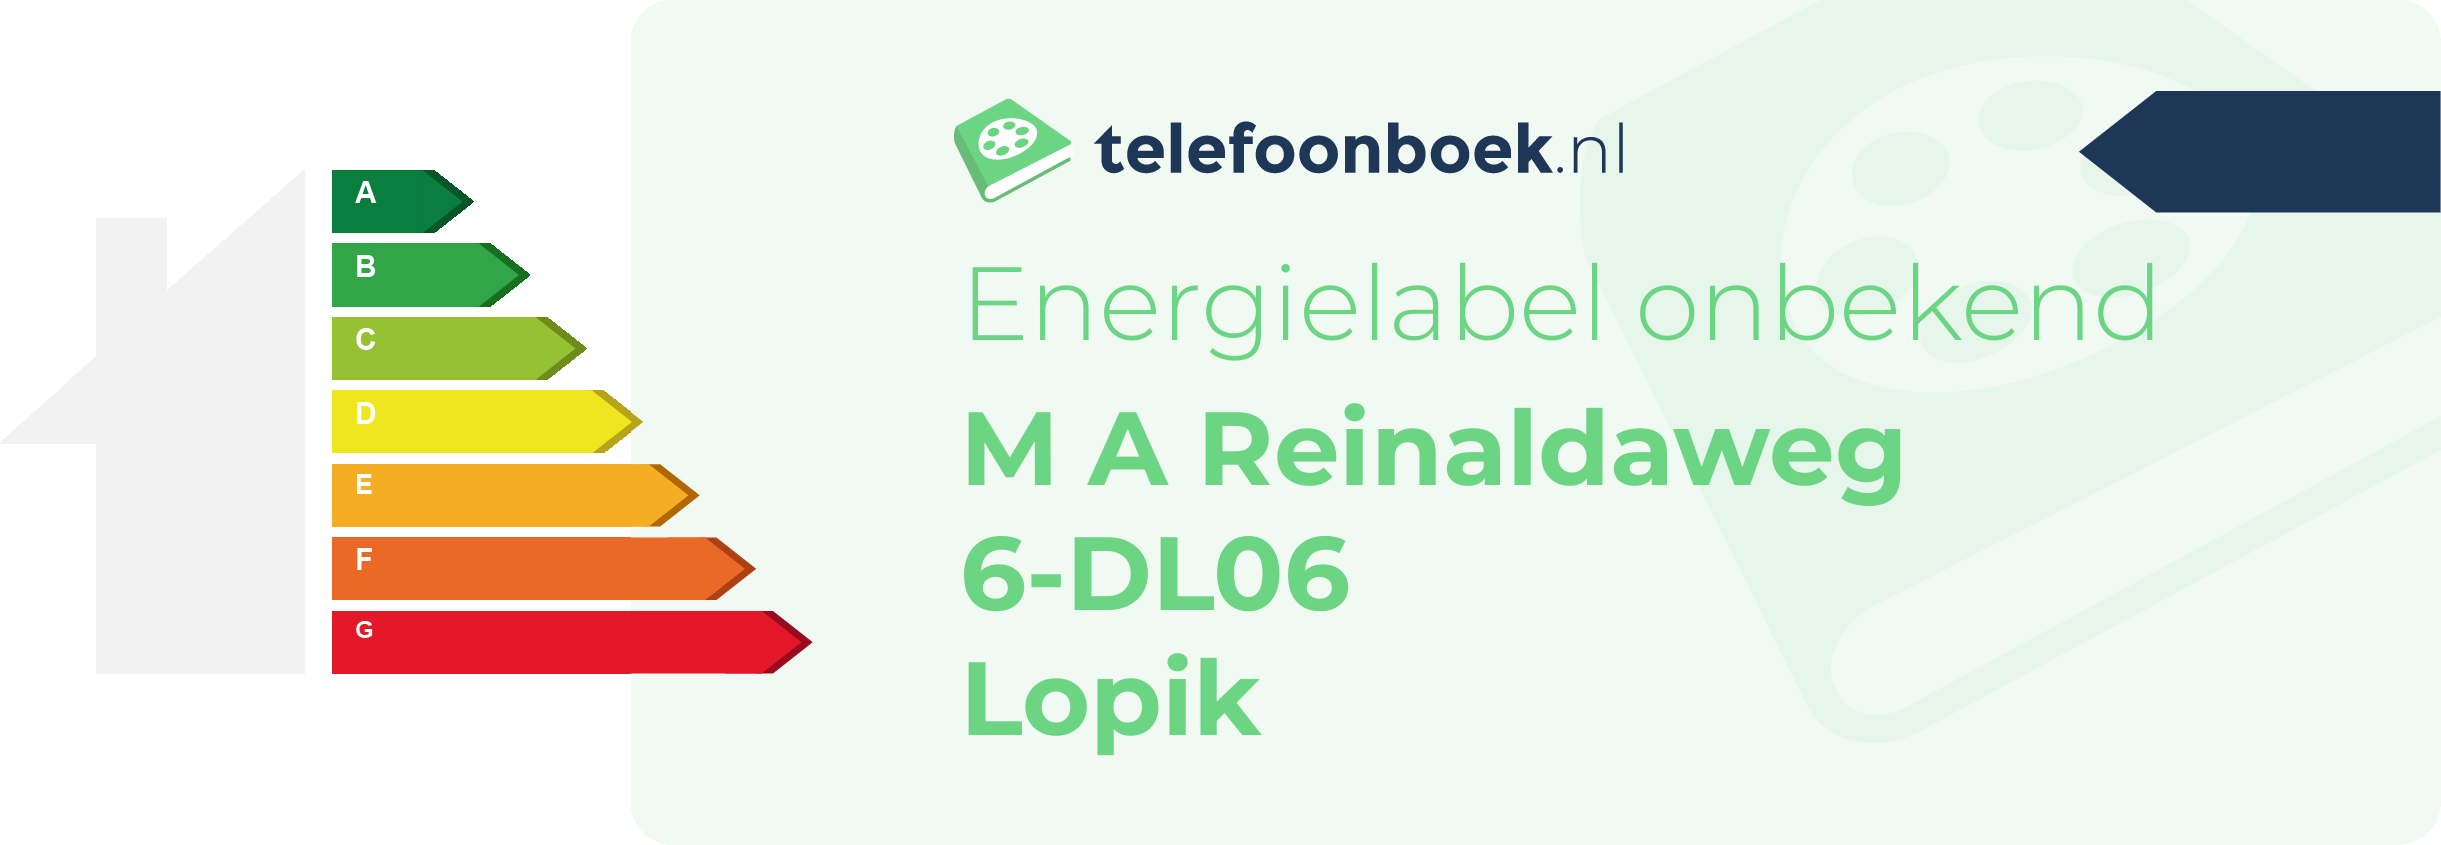 Energielabel M A Reinaldaweg 6-DL06 Lopik